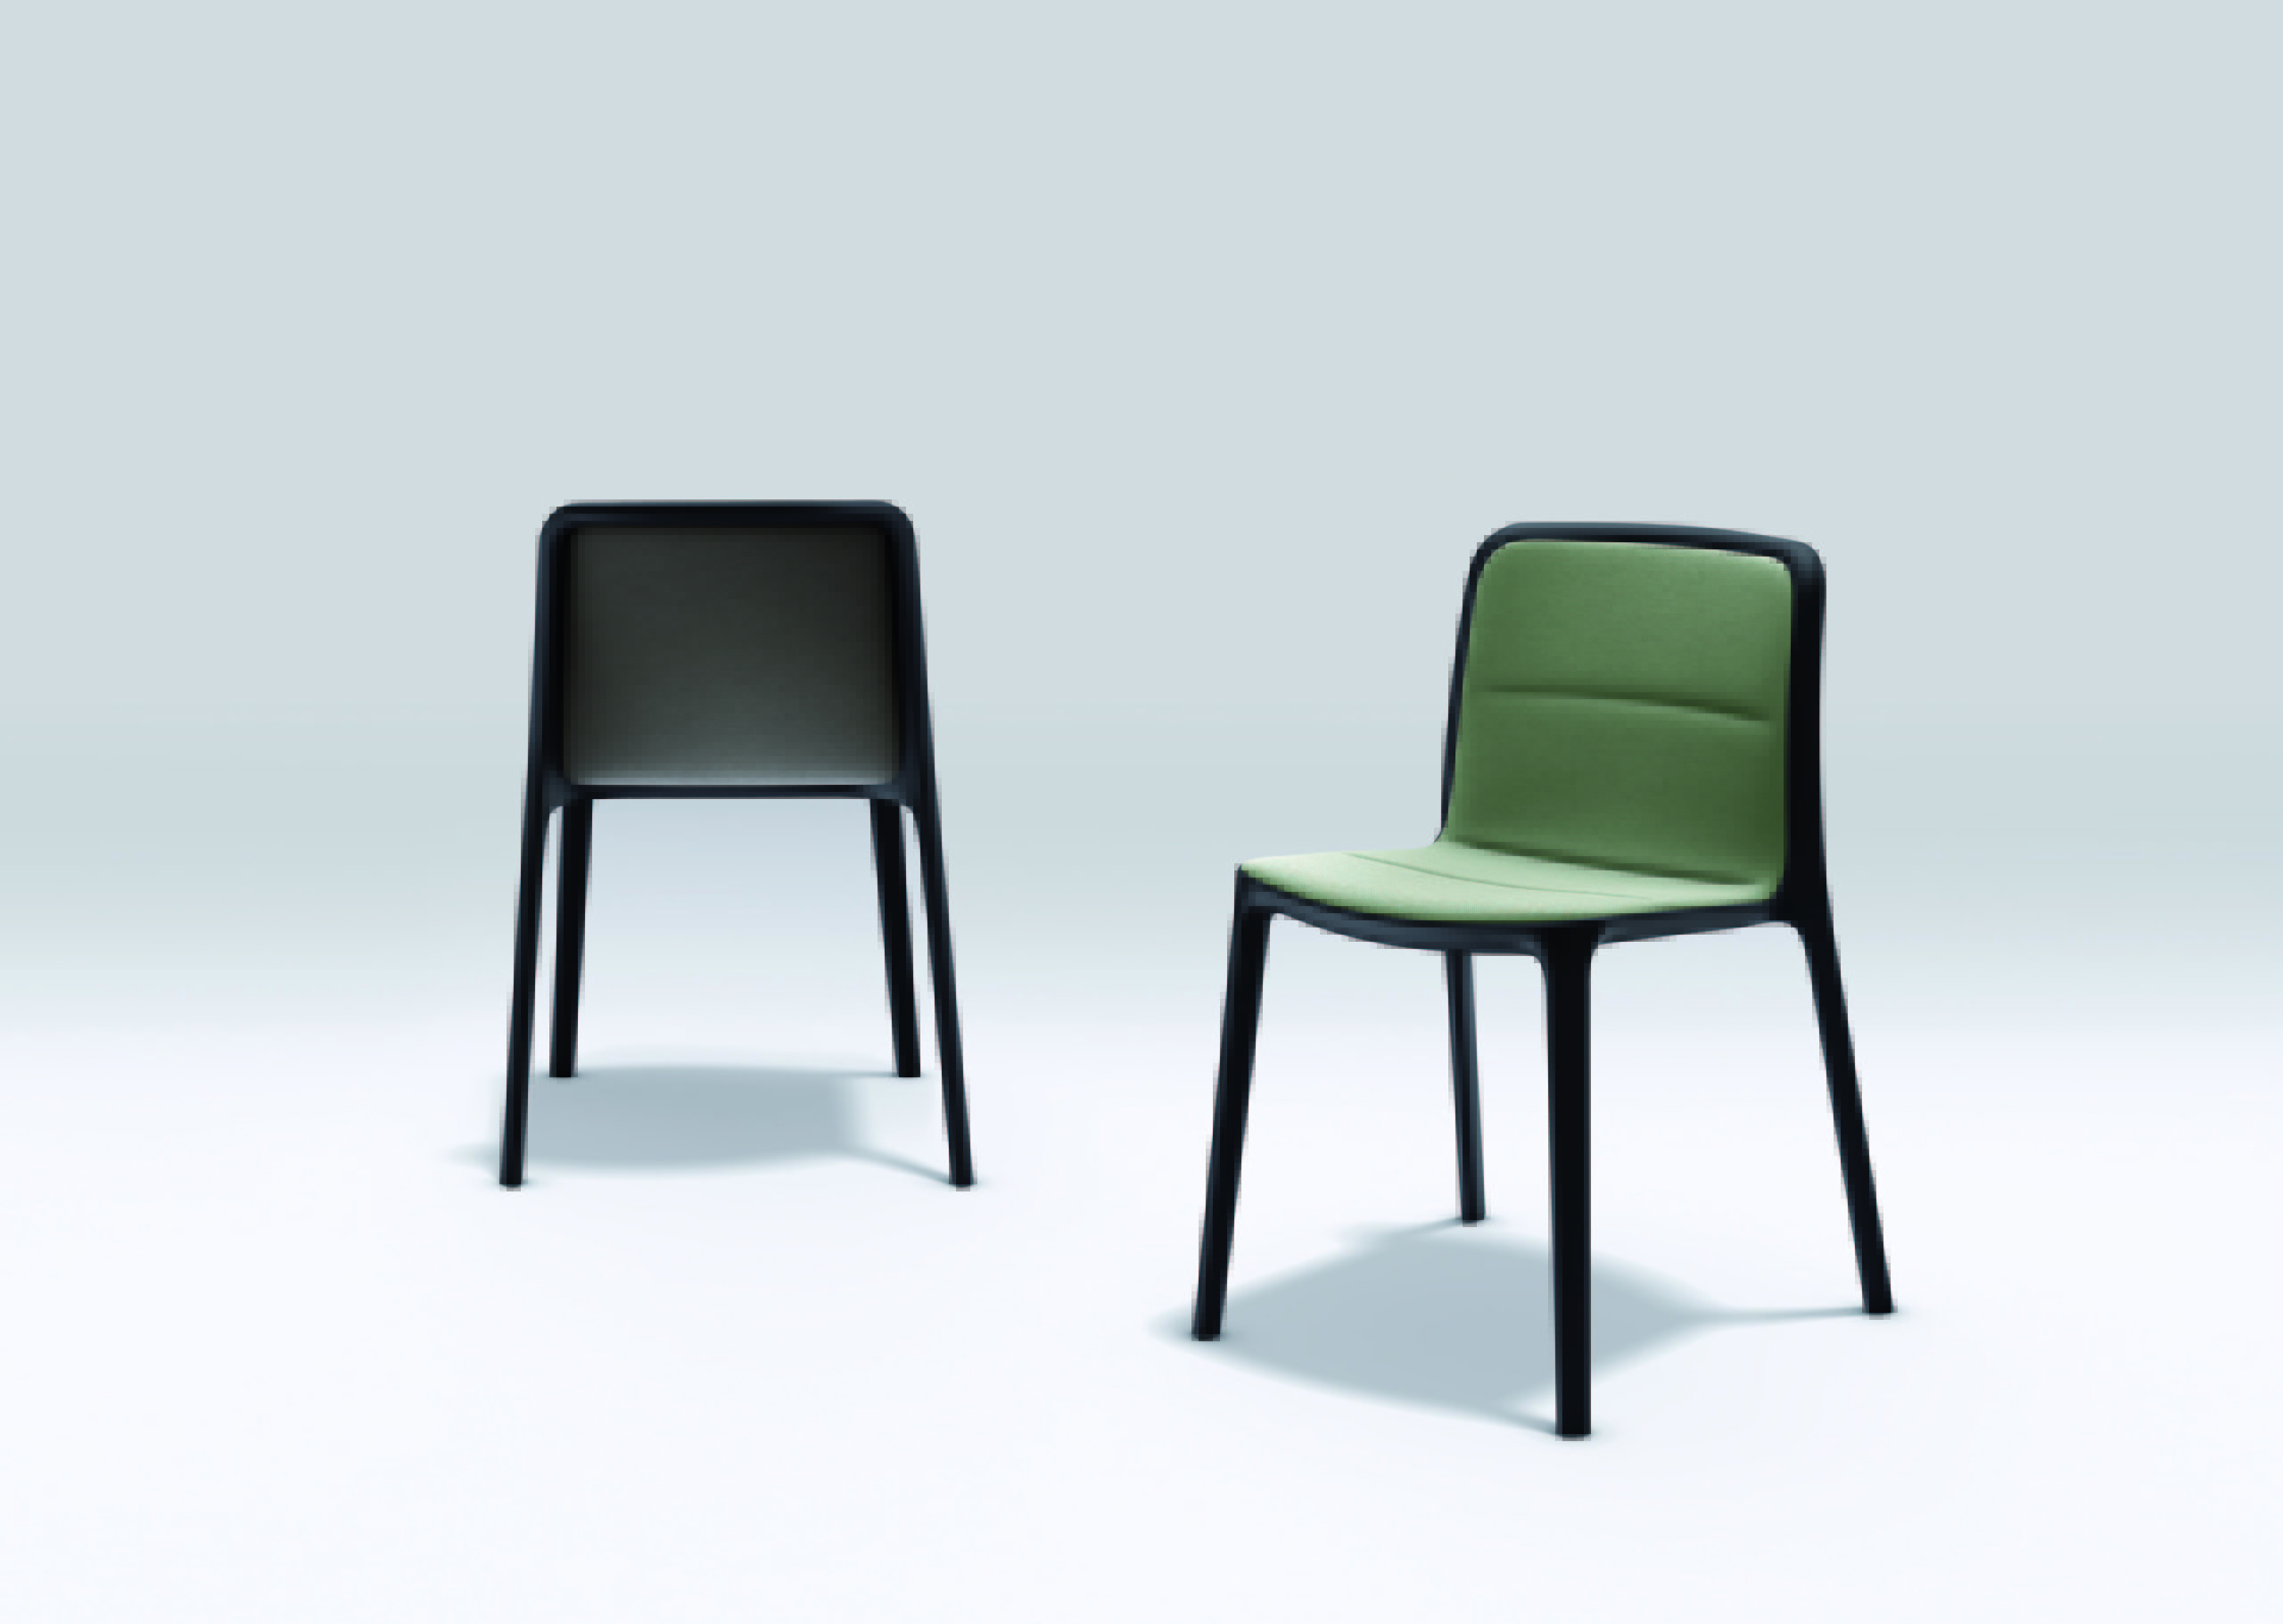 Silla Bika silla de colectividades mobiliario de oficina Impacto Diseño Valencia